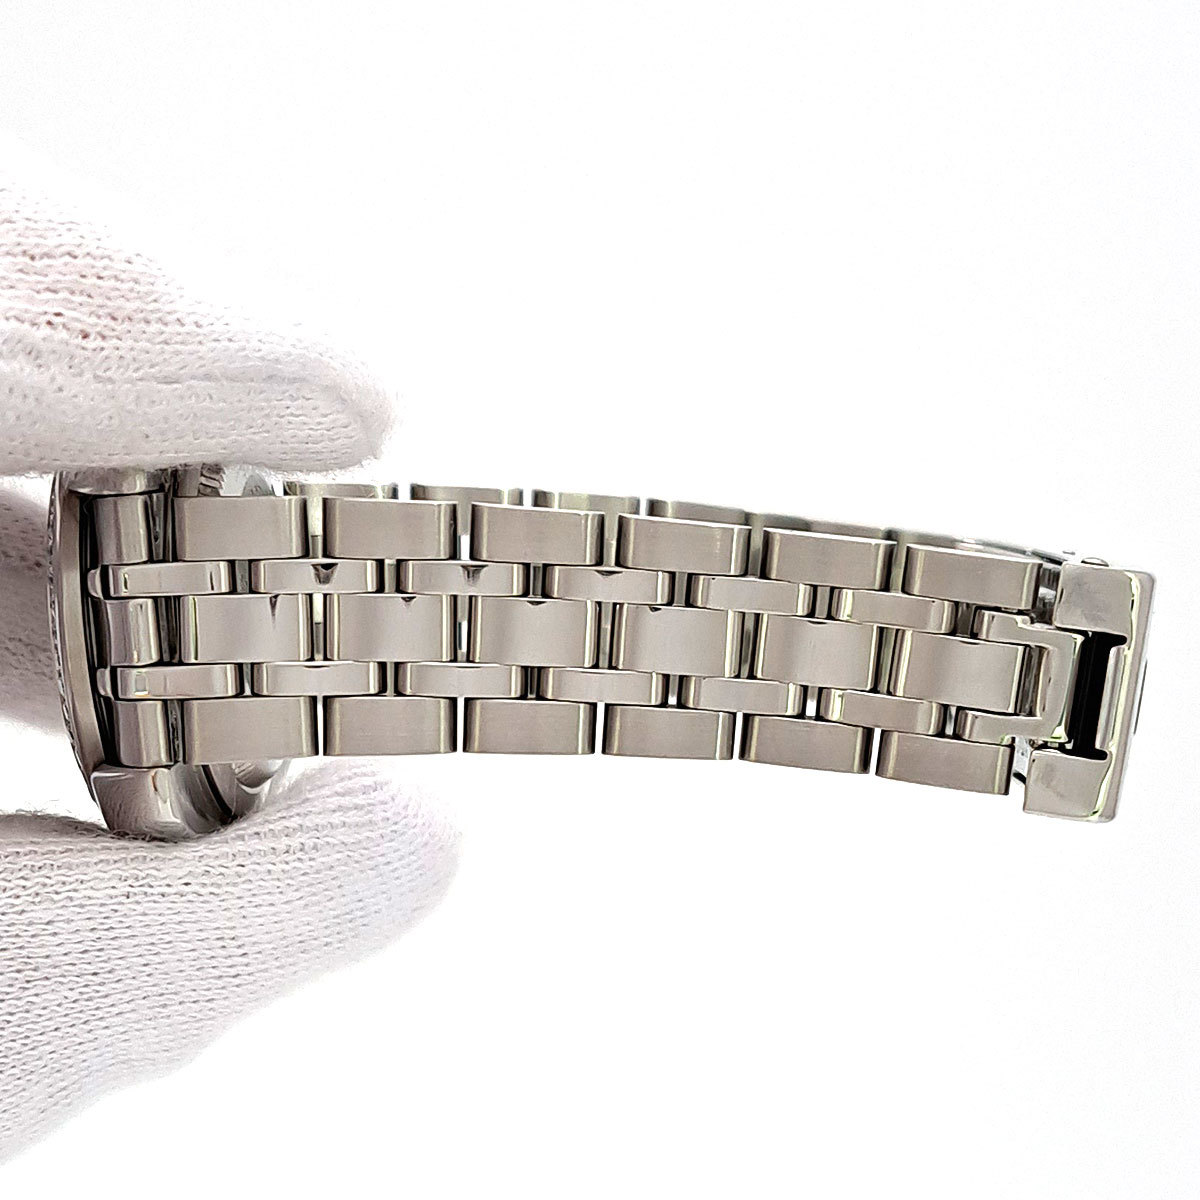 chu-da- Classic Date diamond bezel 22020 self-winding watch stainless steel lady's TUDOR used [ clock ]